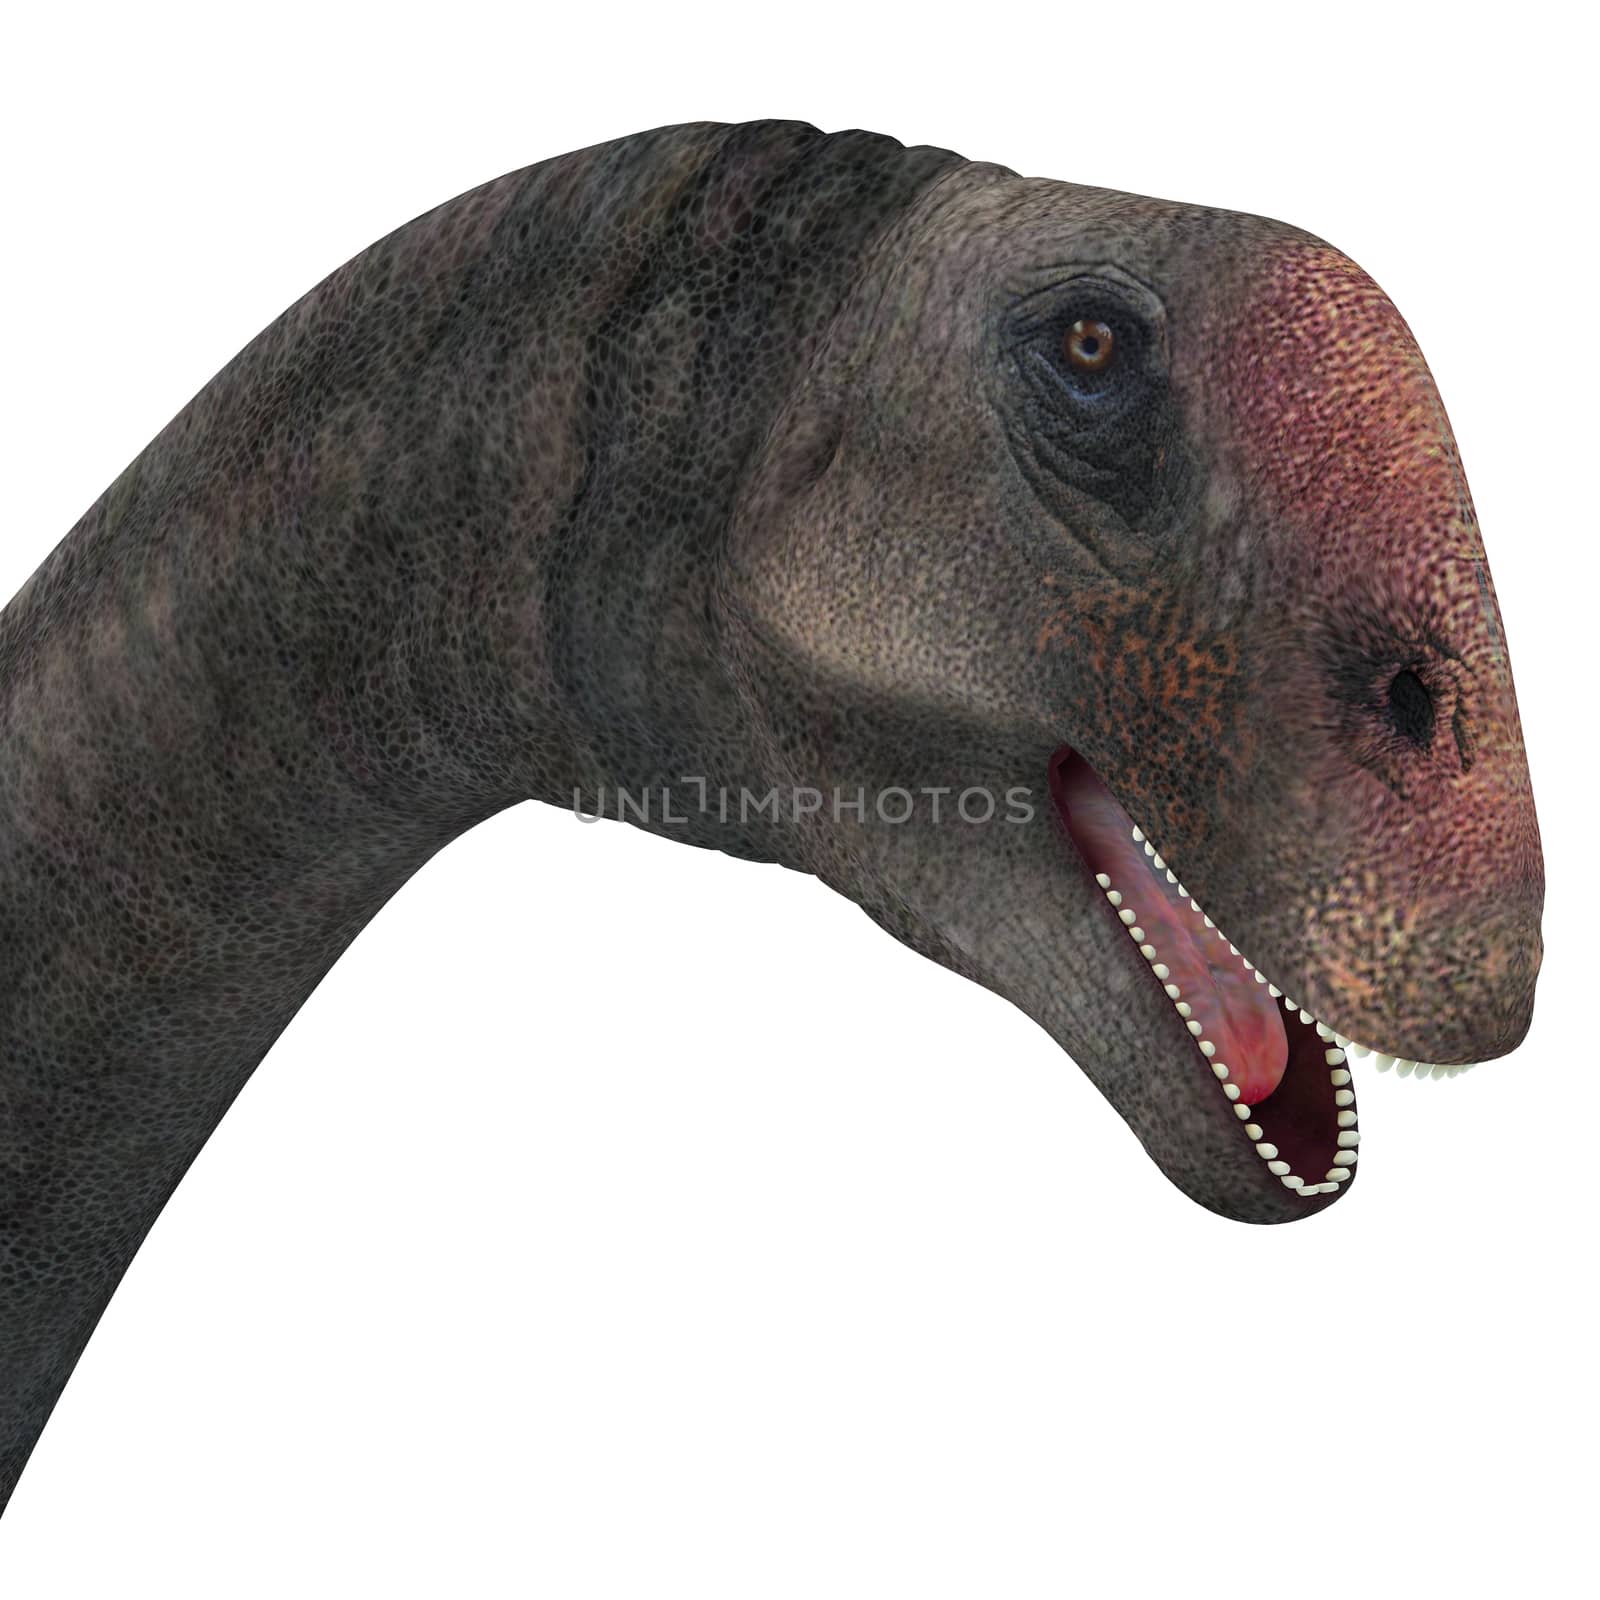 Brontomerus Dinosaur Head by Catmando